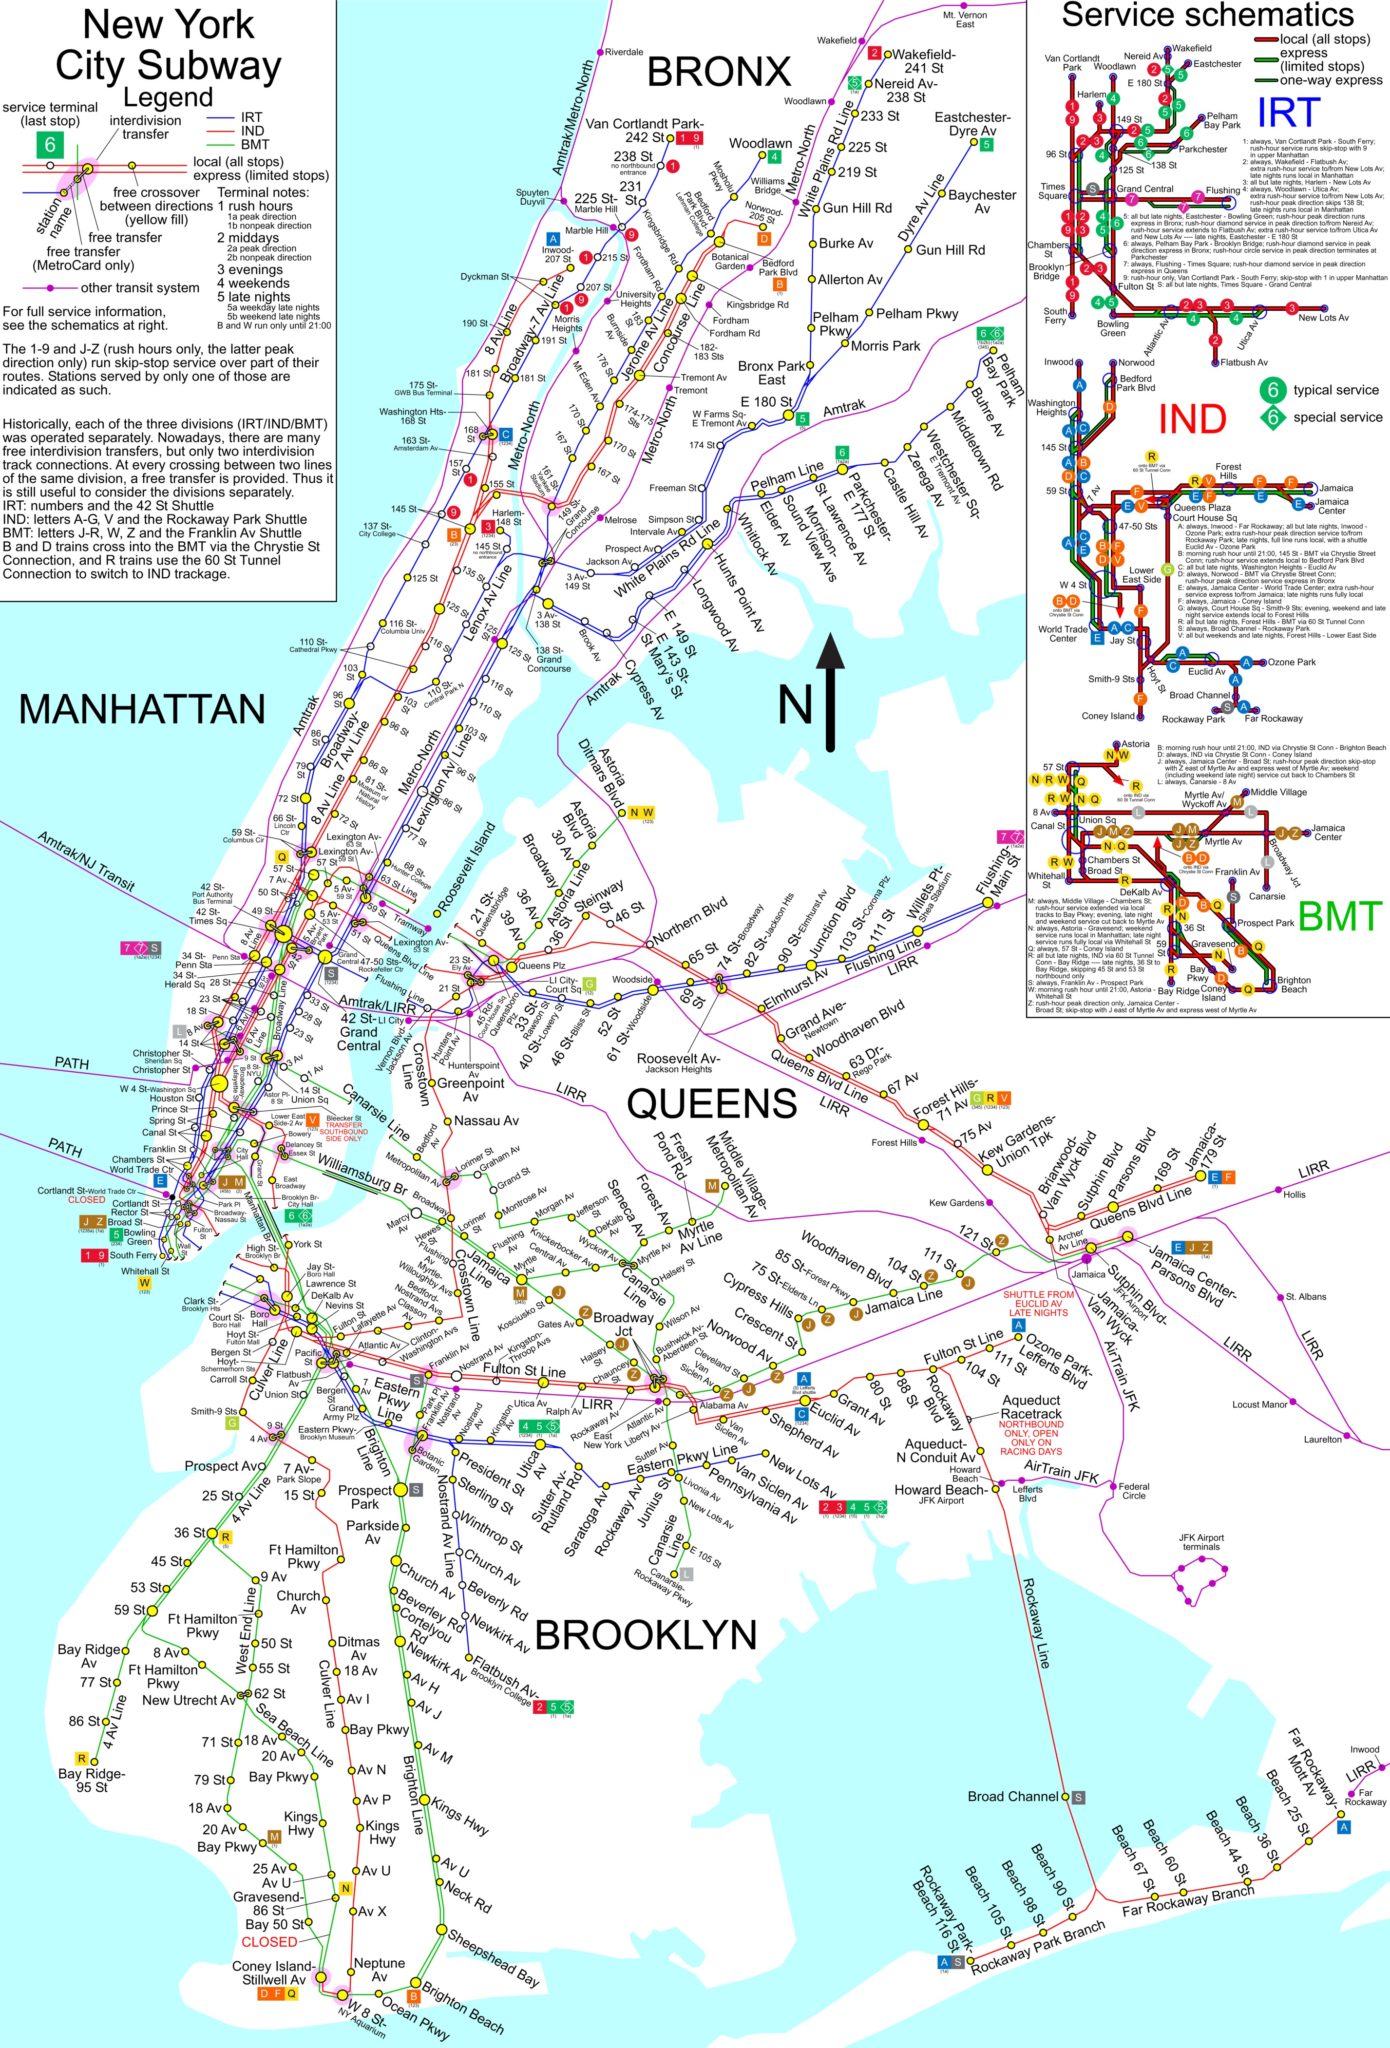 нью йорк, схема метро нью-йорк, схема метрополитена нью йорка, метро нью йорк.